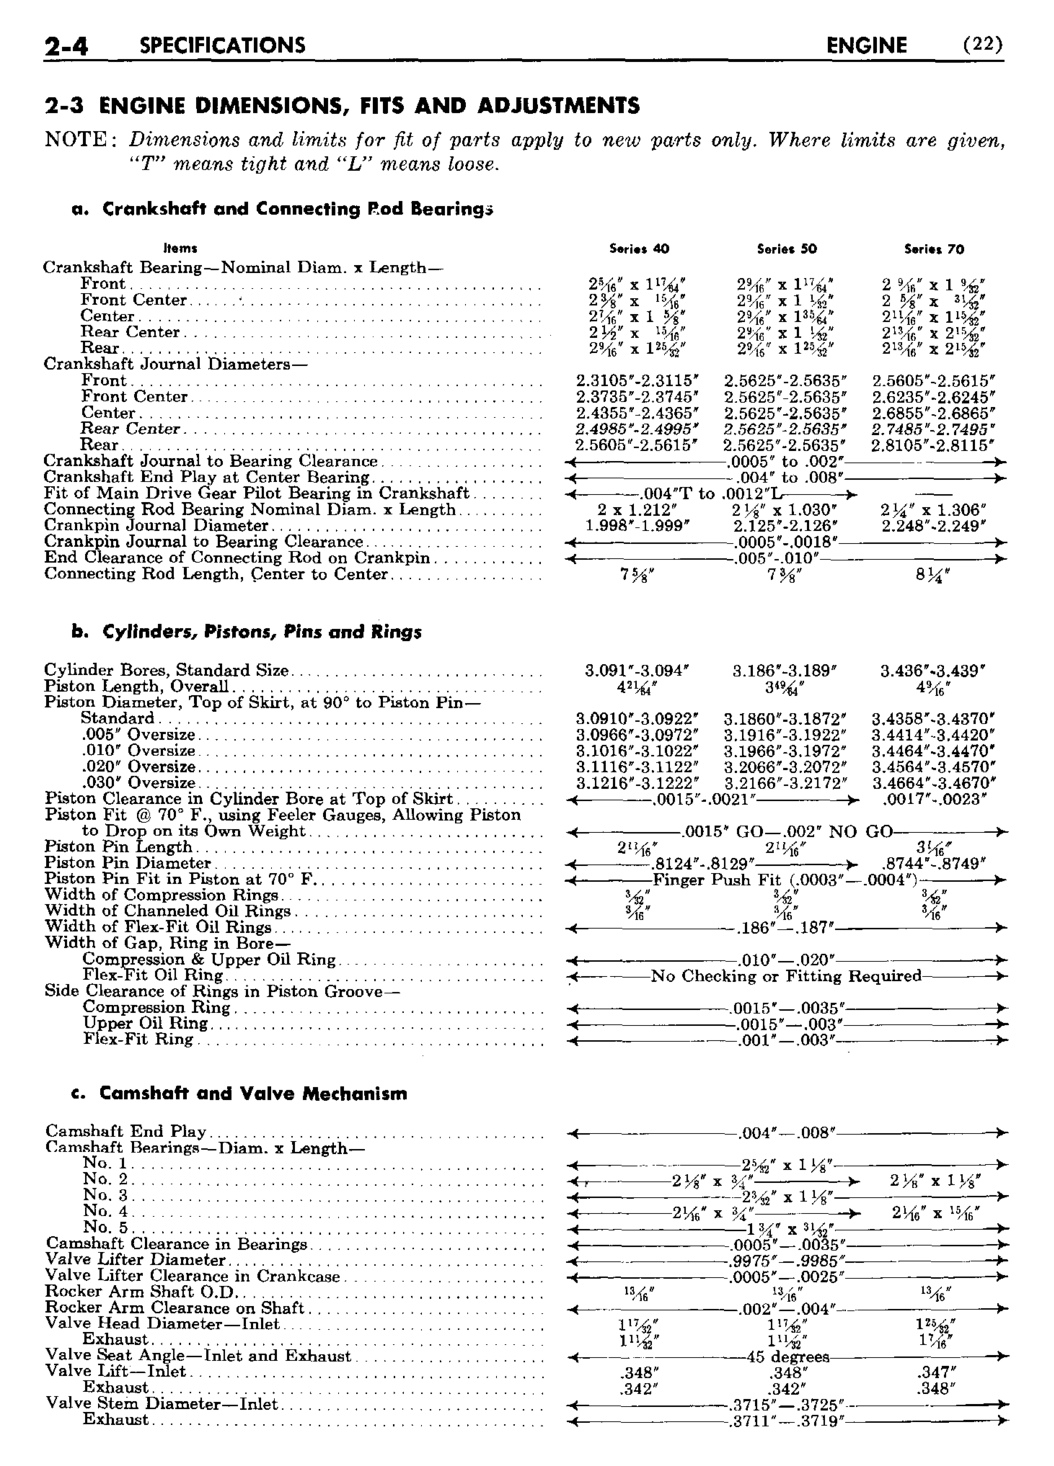 n_03 1950 Buick Shop Manual - Engine-004-004.jpg